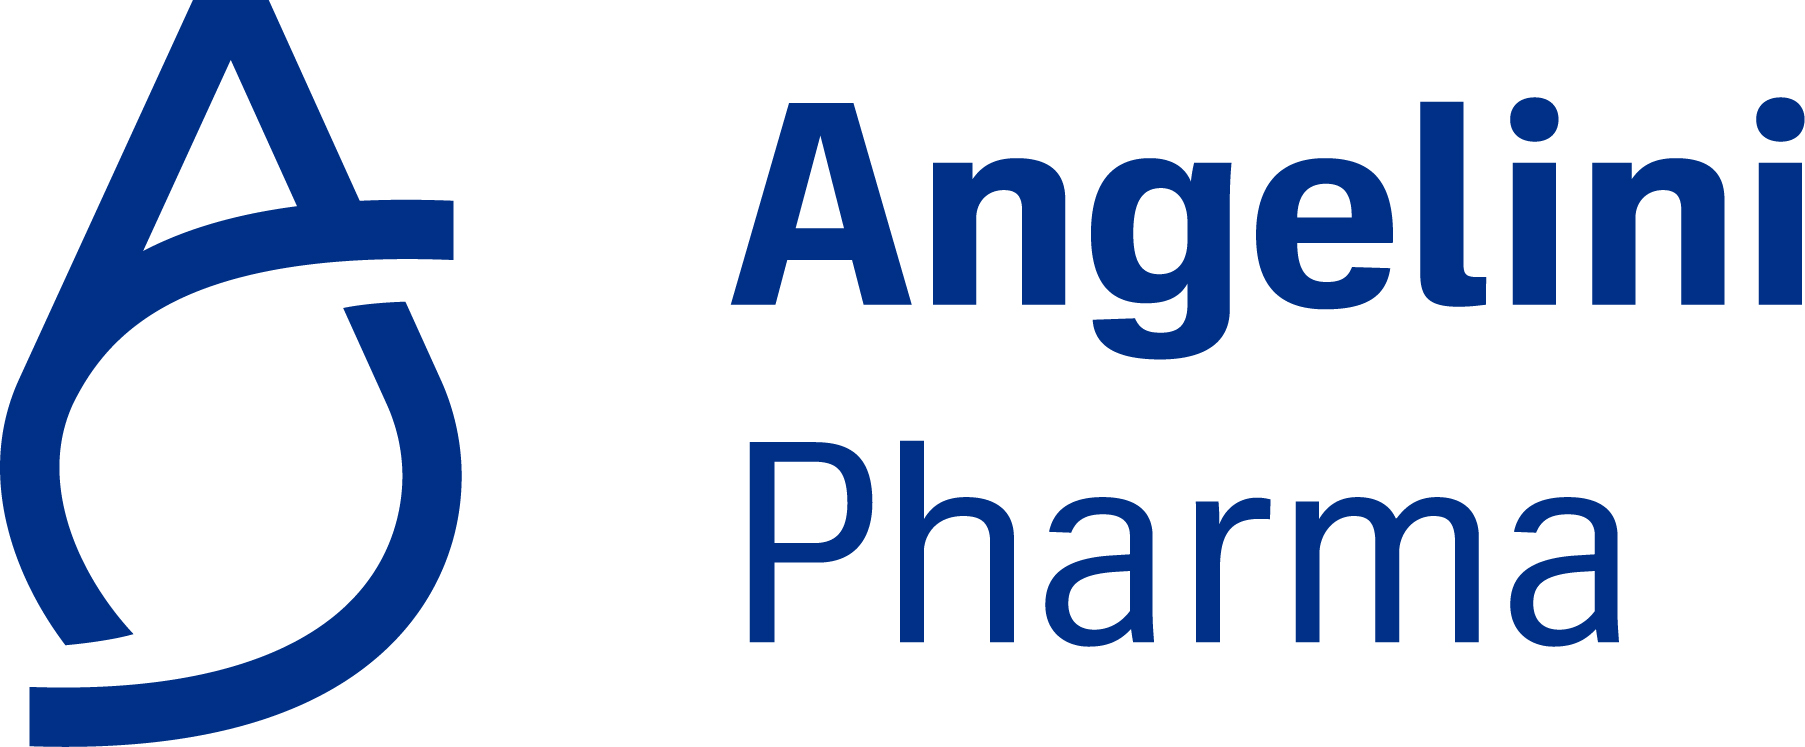 Angelini_Pharma_Colore_RGB